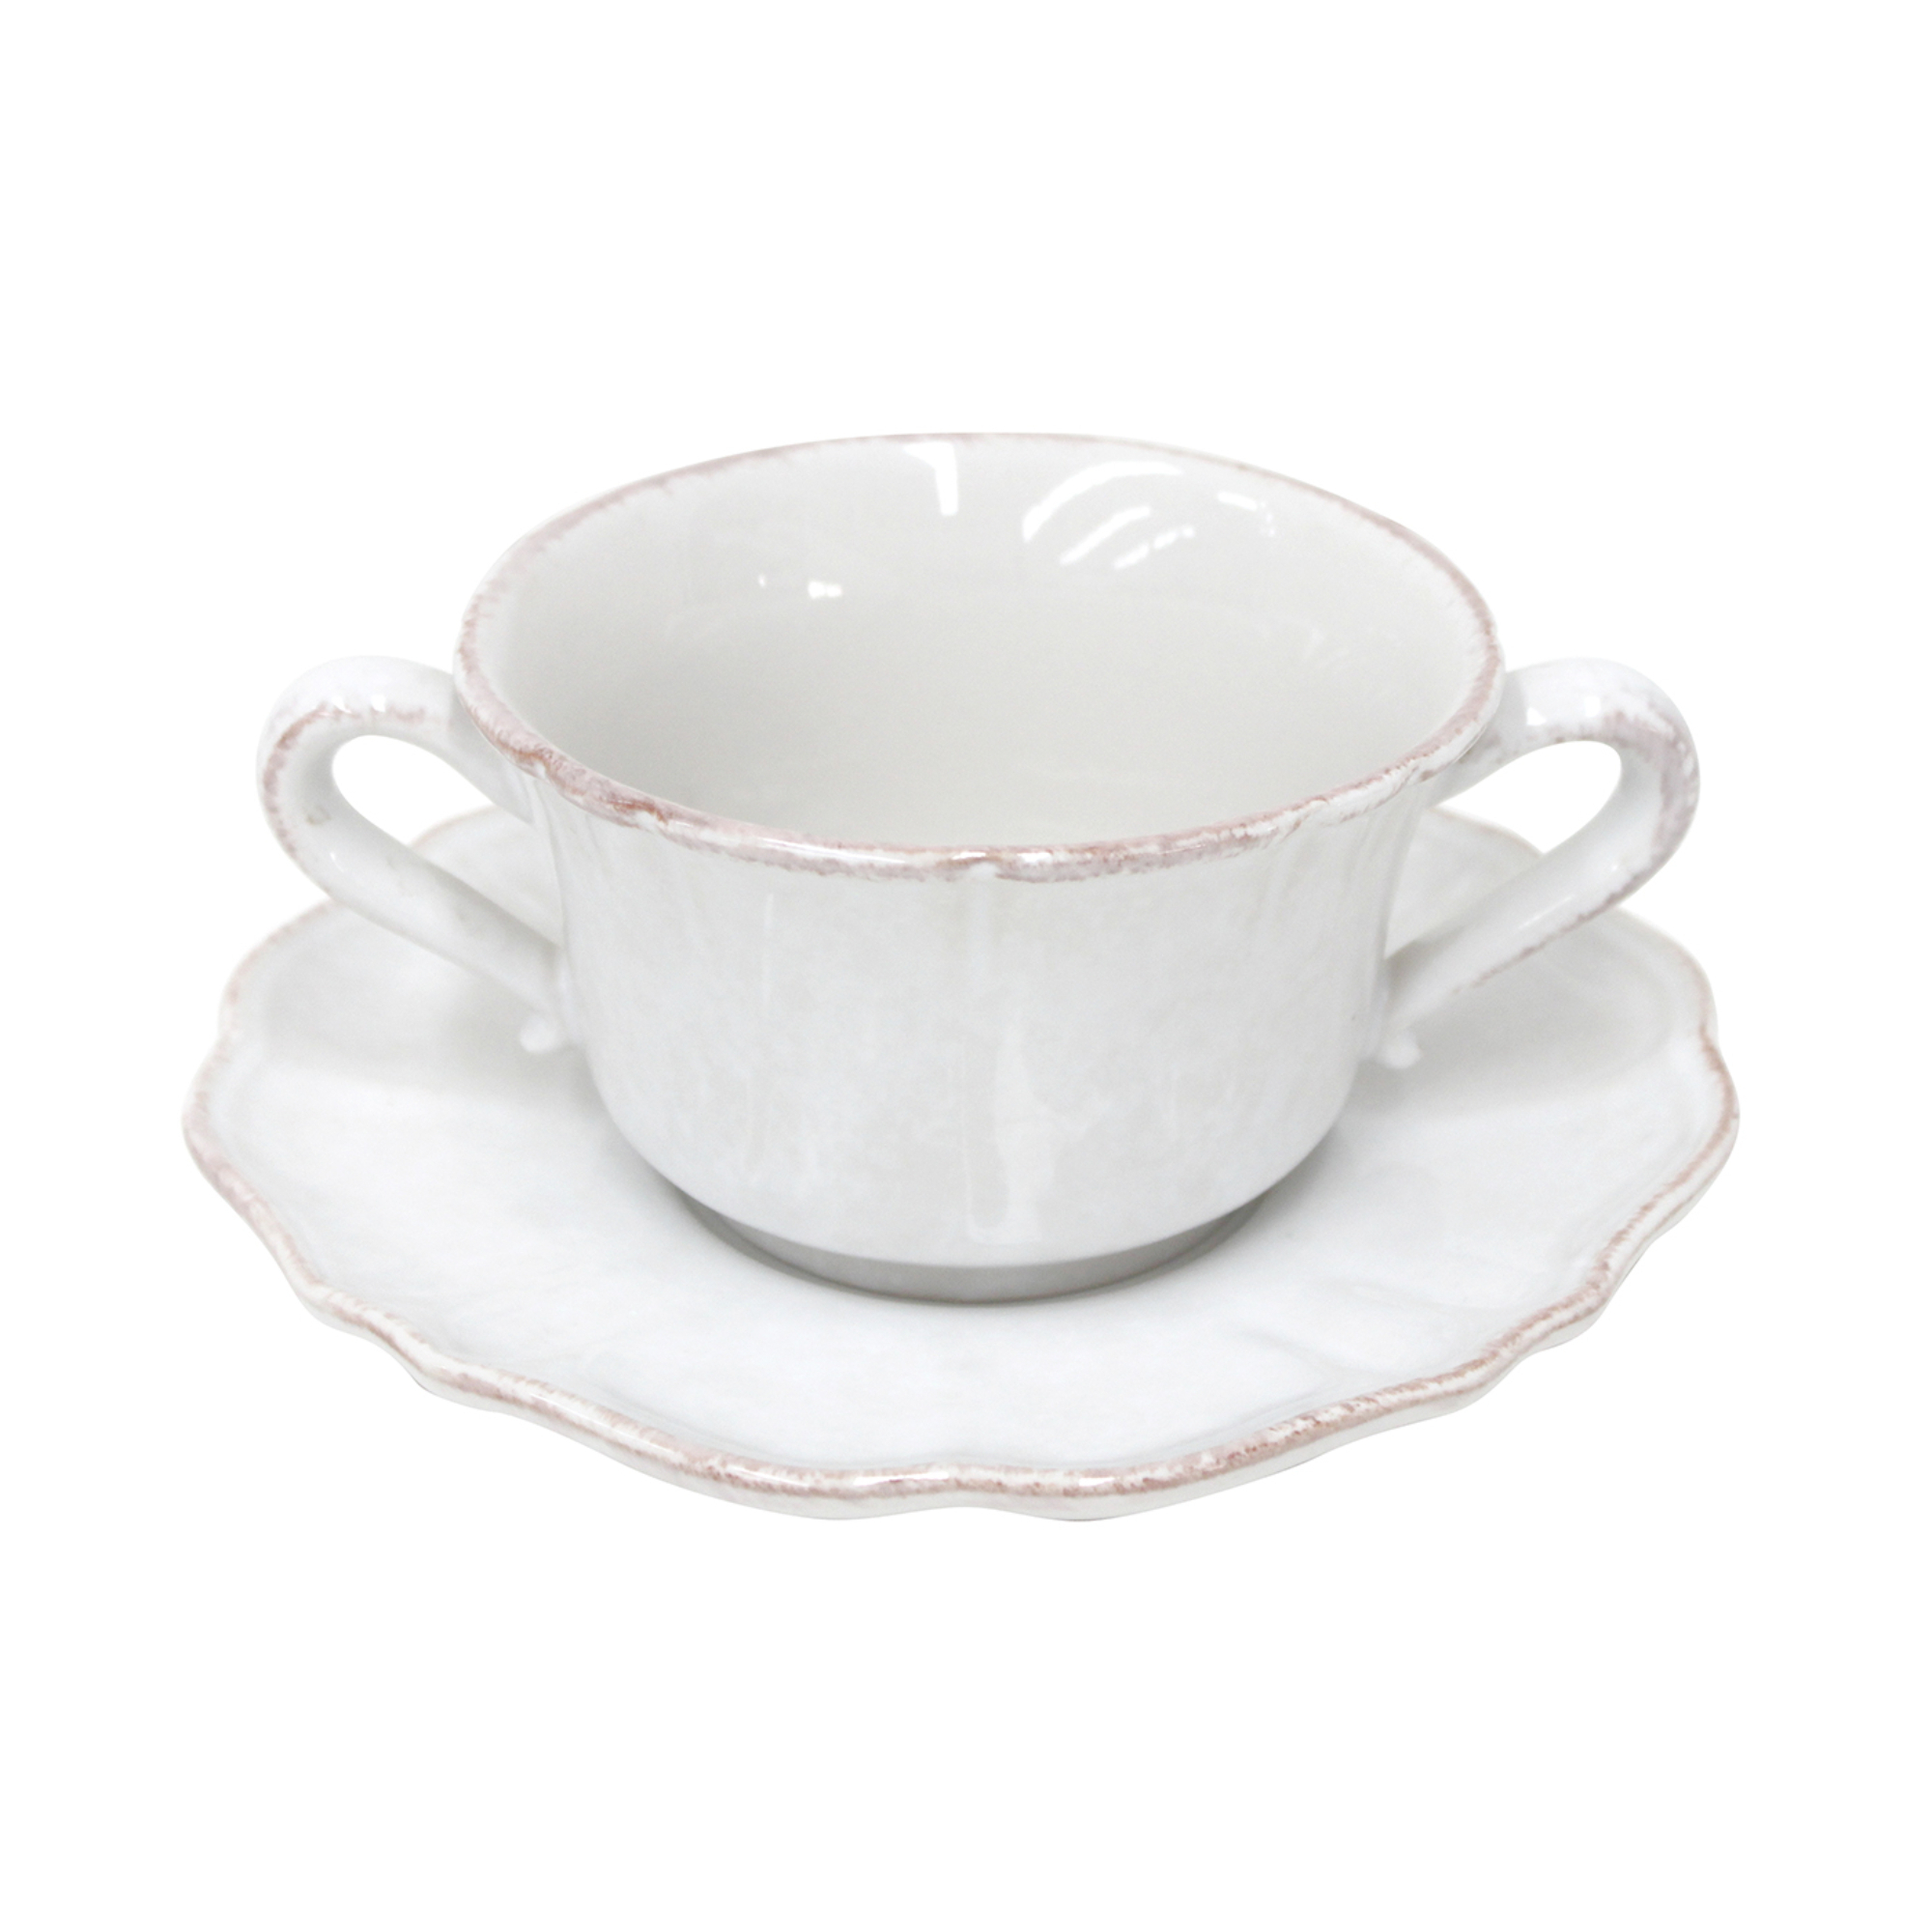 Costa nova white. White Ceramic Cup.